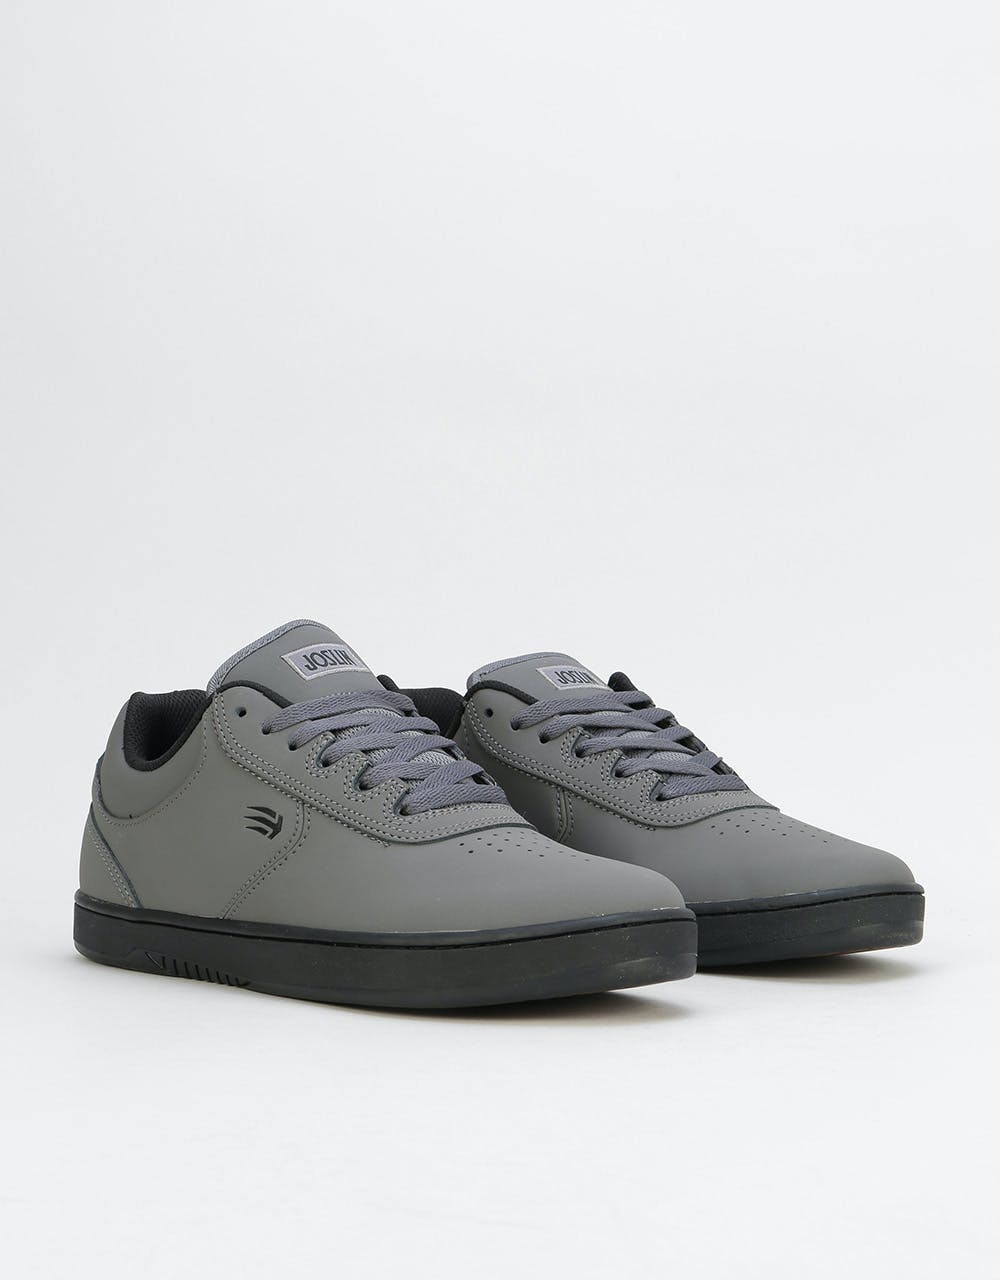 Etniesx Michelin Joslin Skate Shoes - Grey/Black/Gum